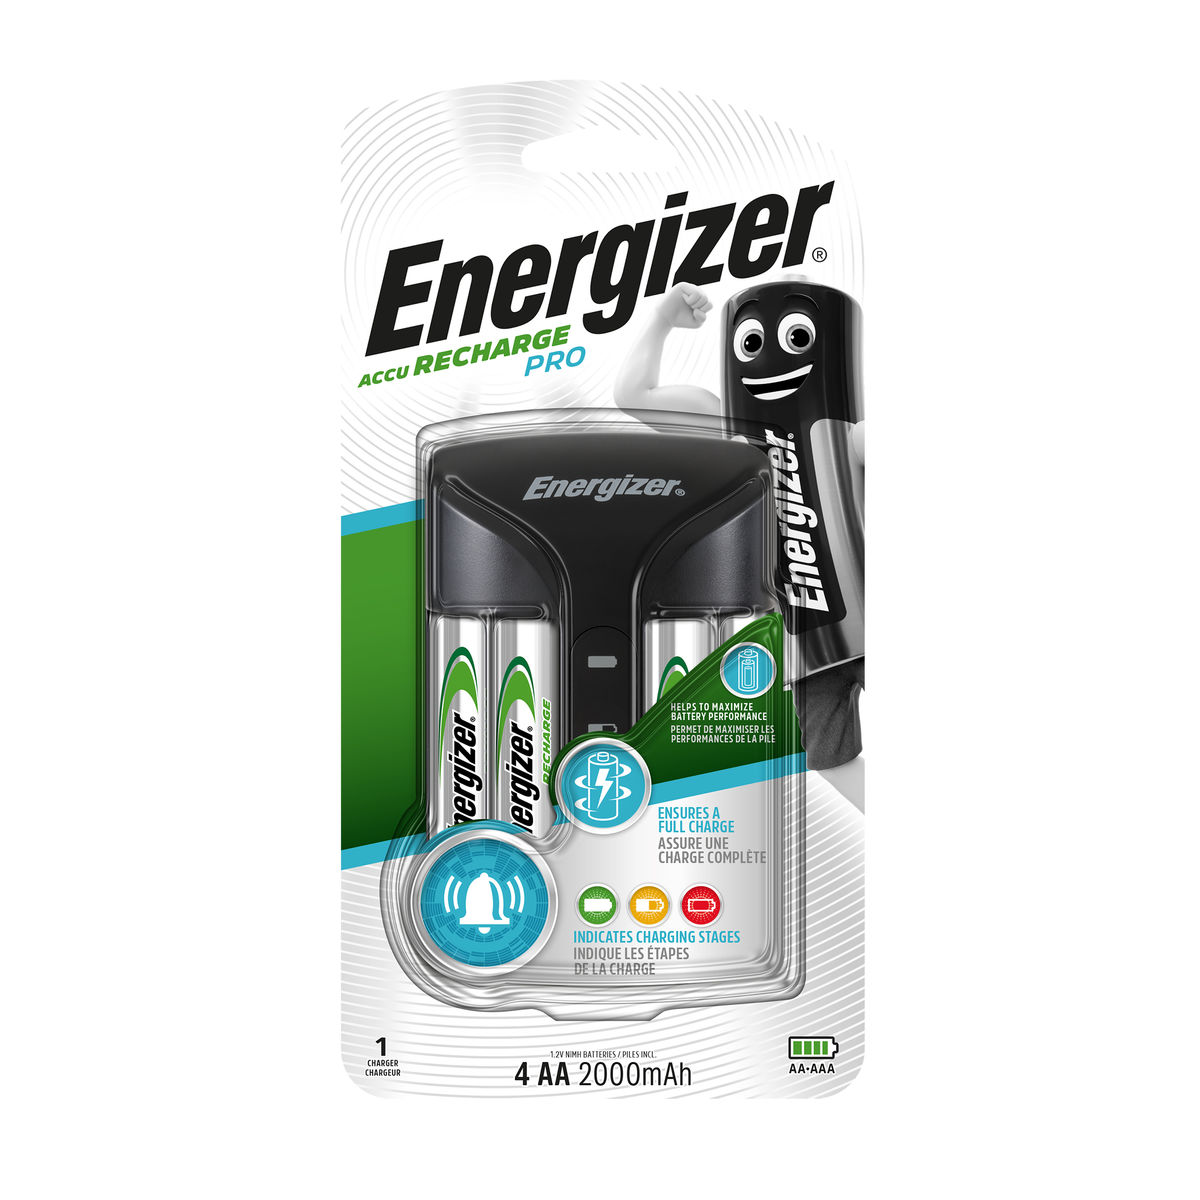 Energizer Chargeur Accu Recharge Pro pour 4 piles AA